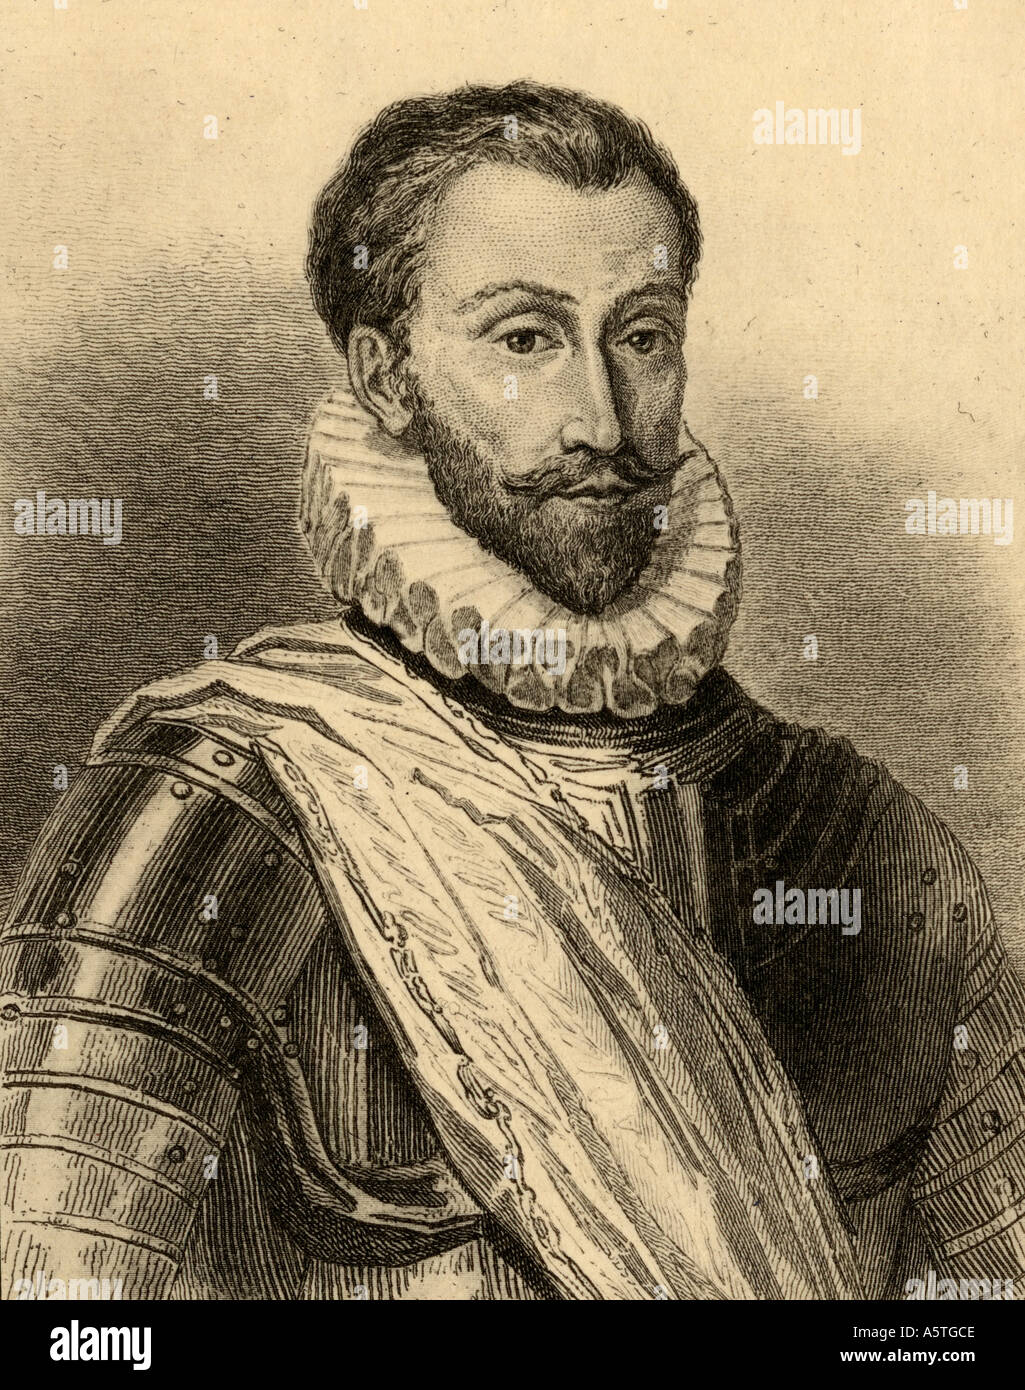 Francois de La Noue, genannt Bras-de-Fer, 1531 - 1591. Hugenotten Kapitän in der französischen Religionskriege. Stockfoto